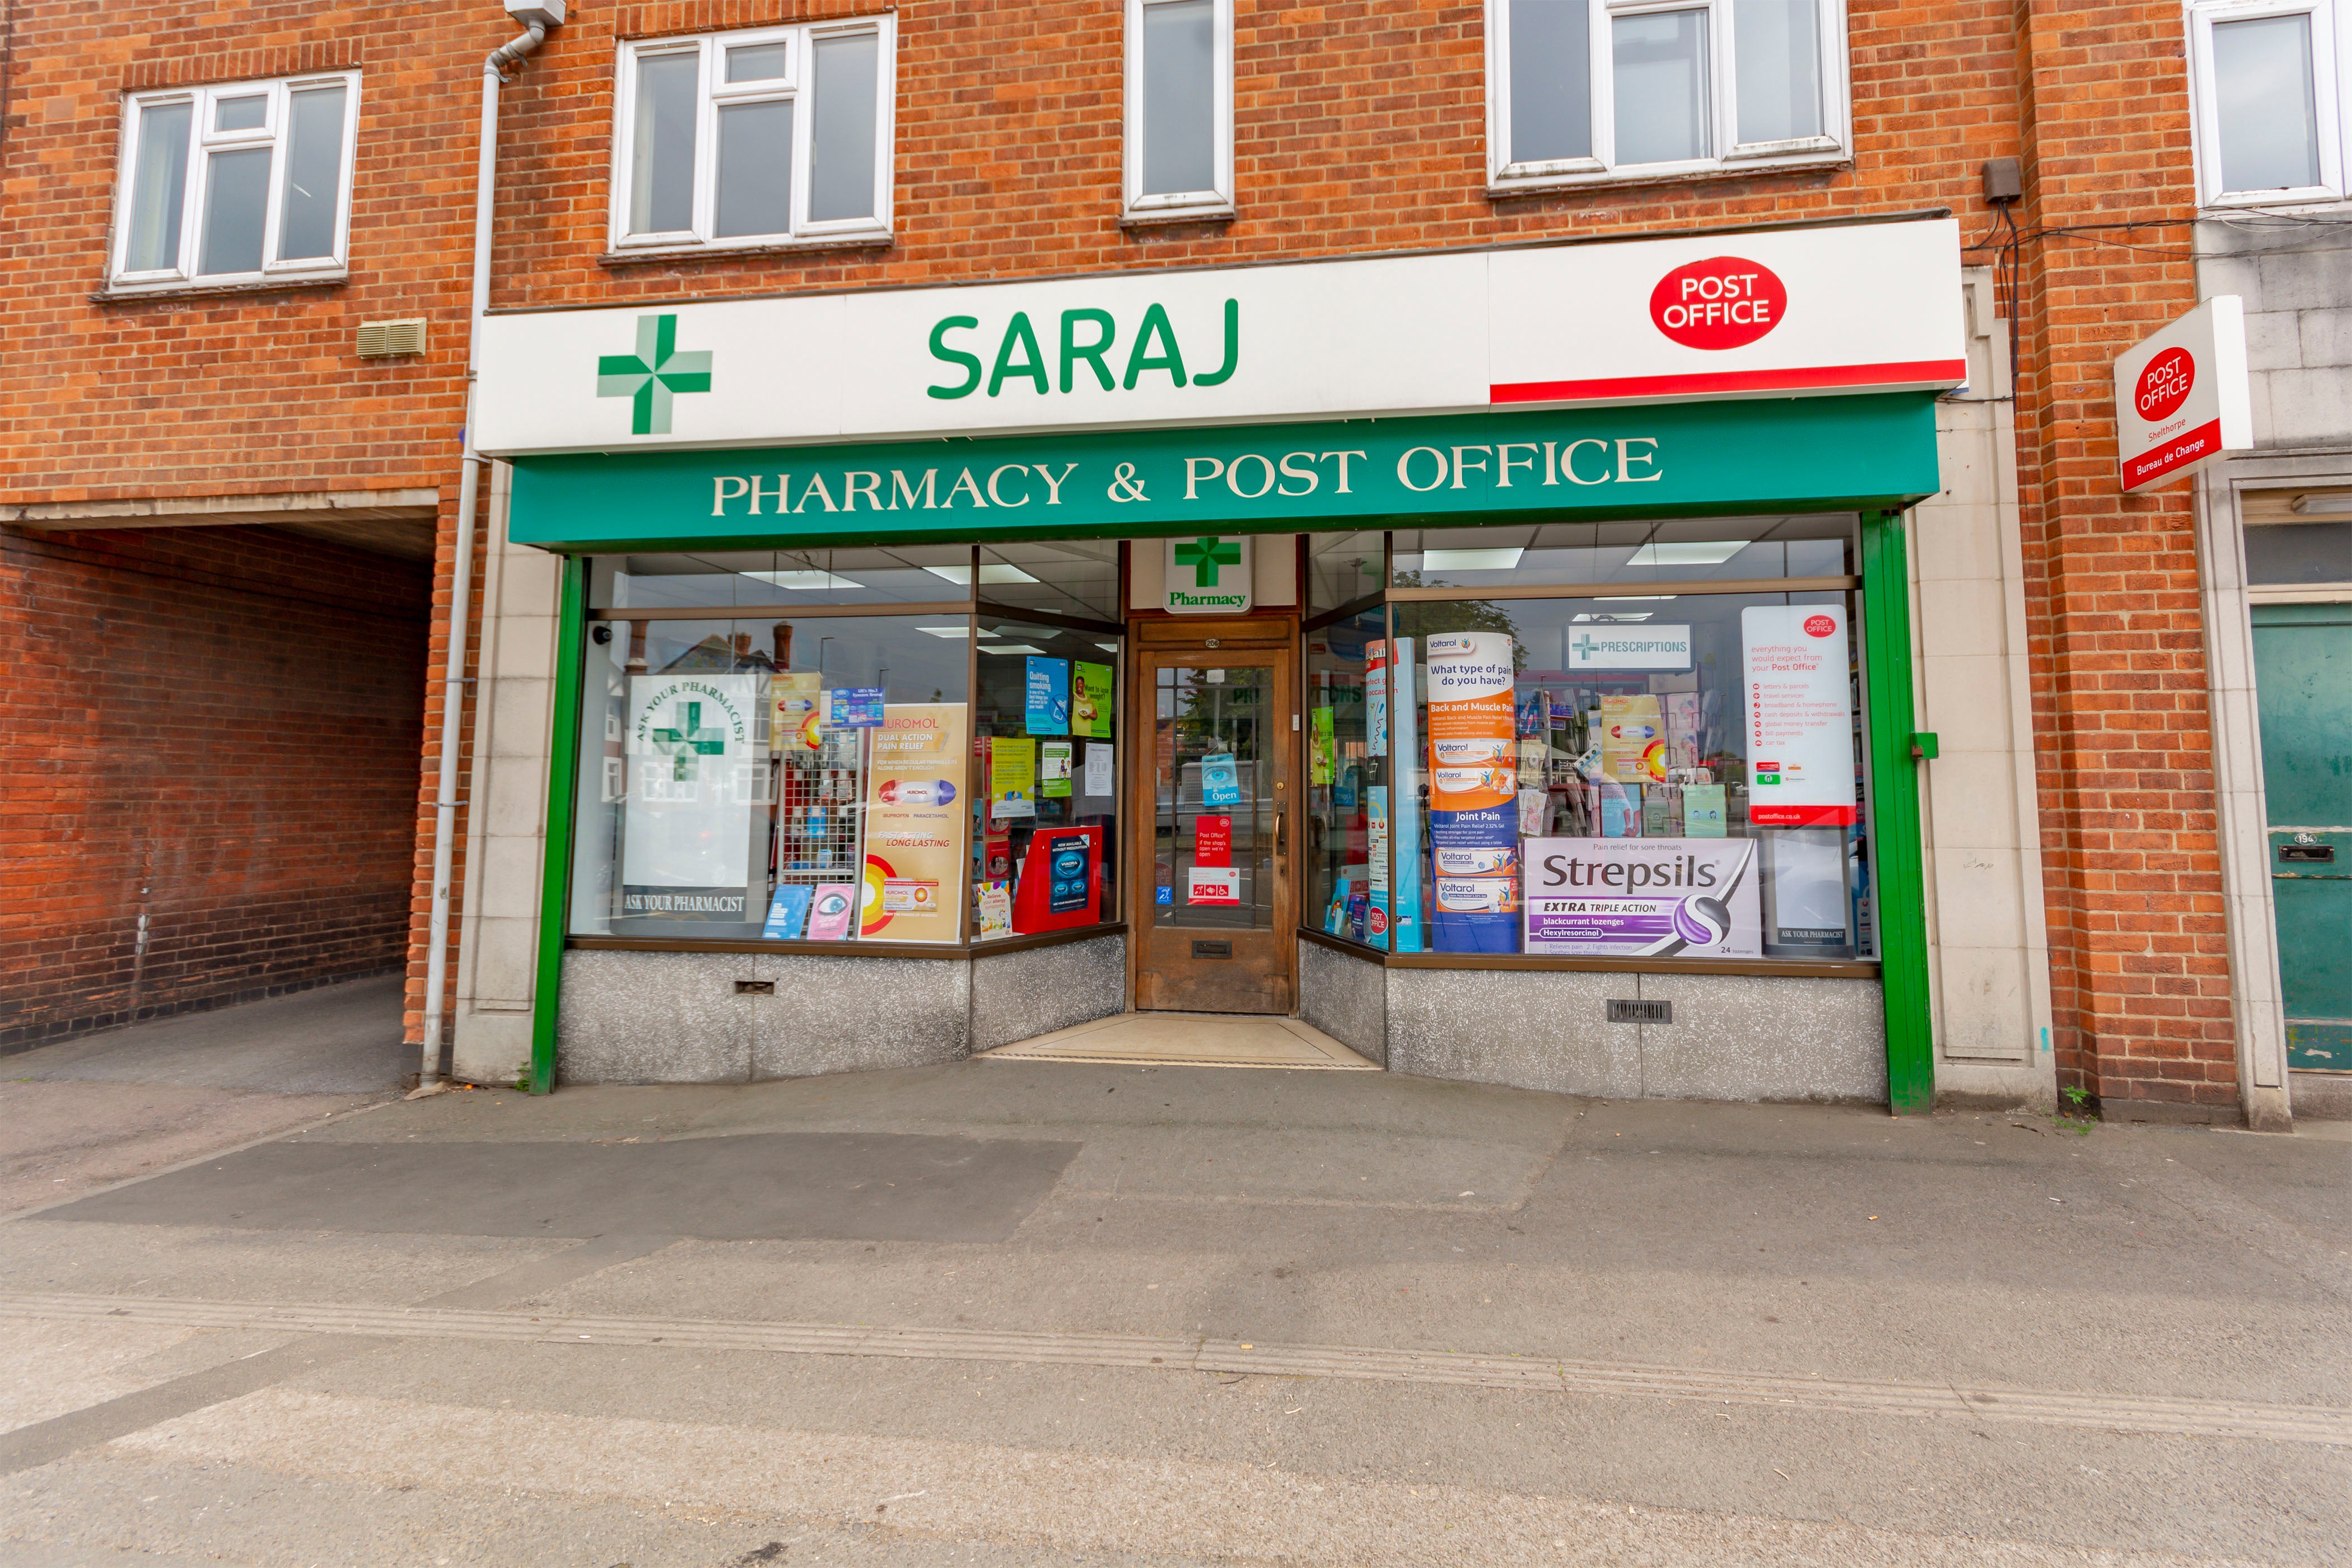 Saraj Pharmacy & Post Office in Loughborough